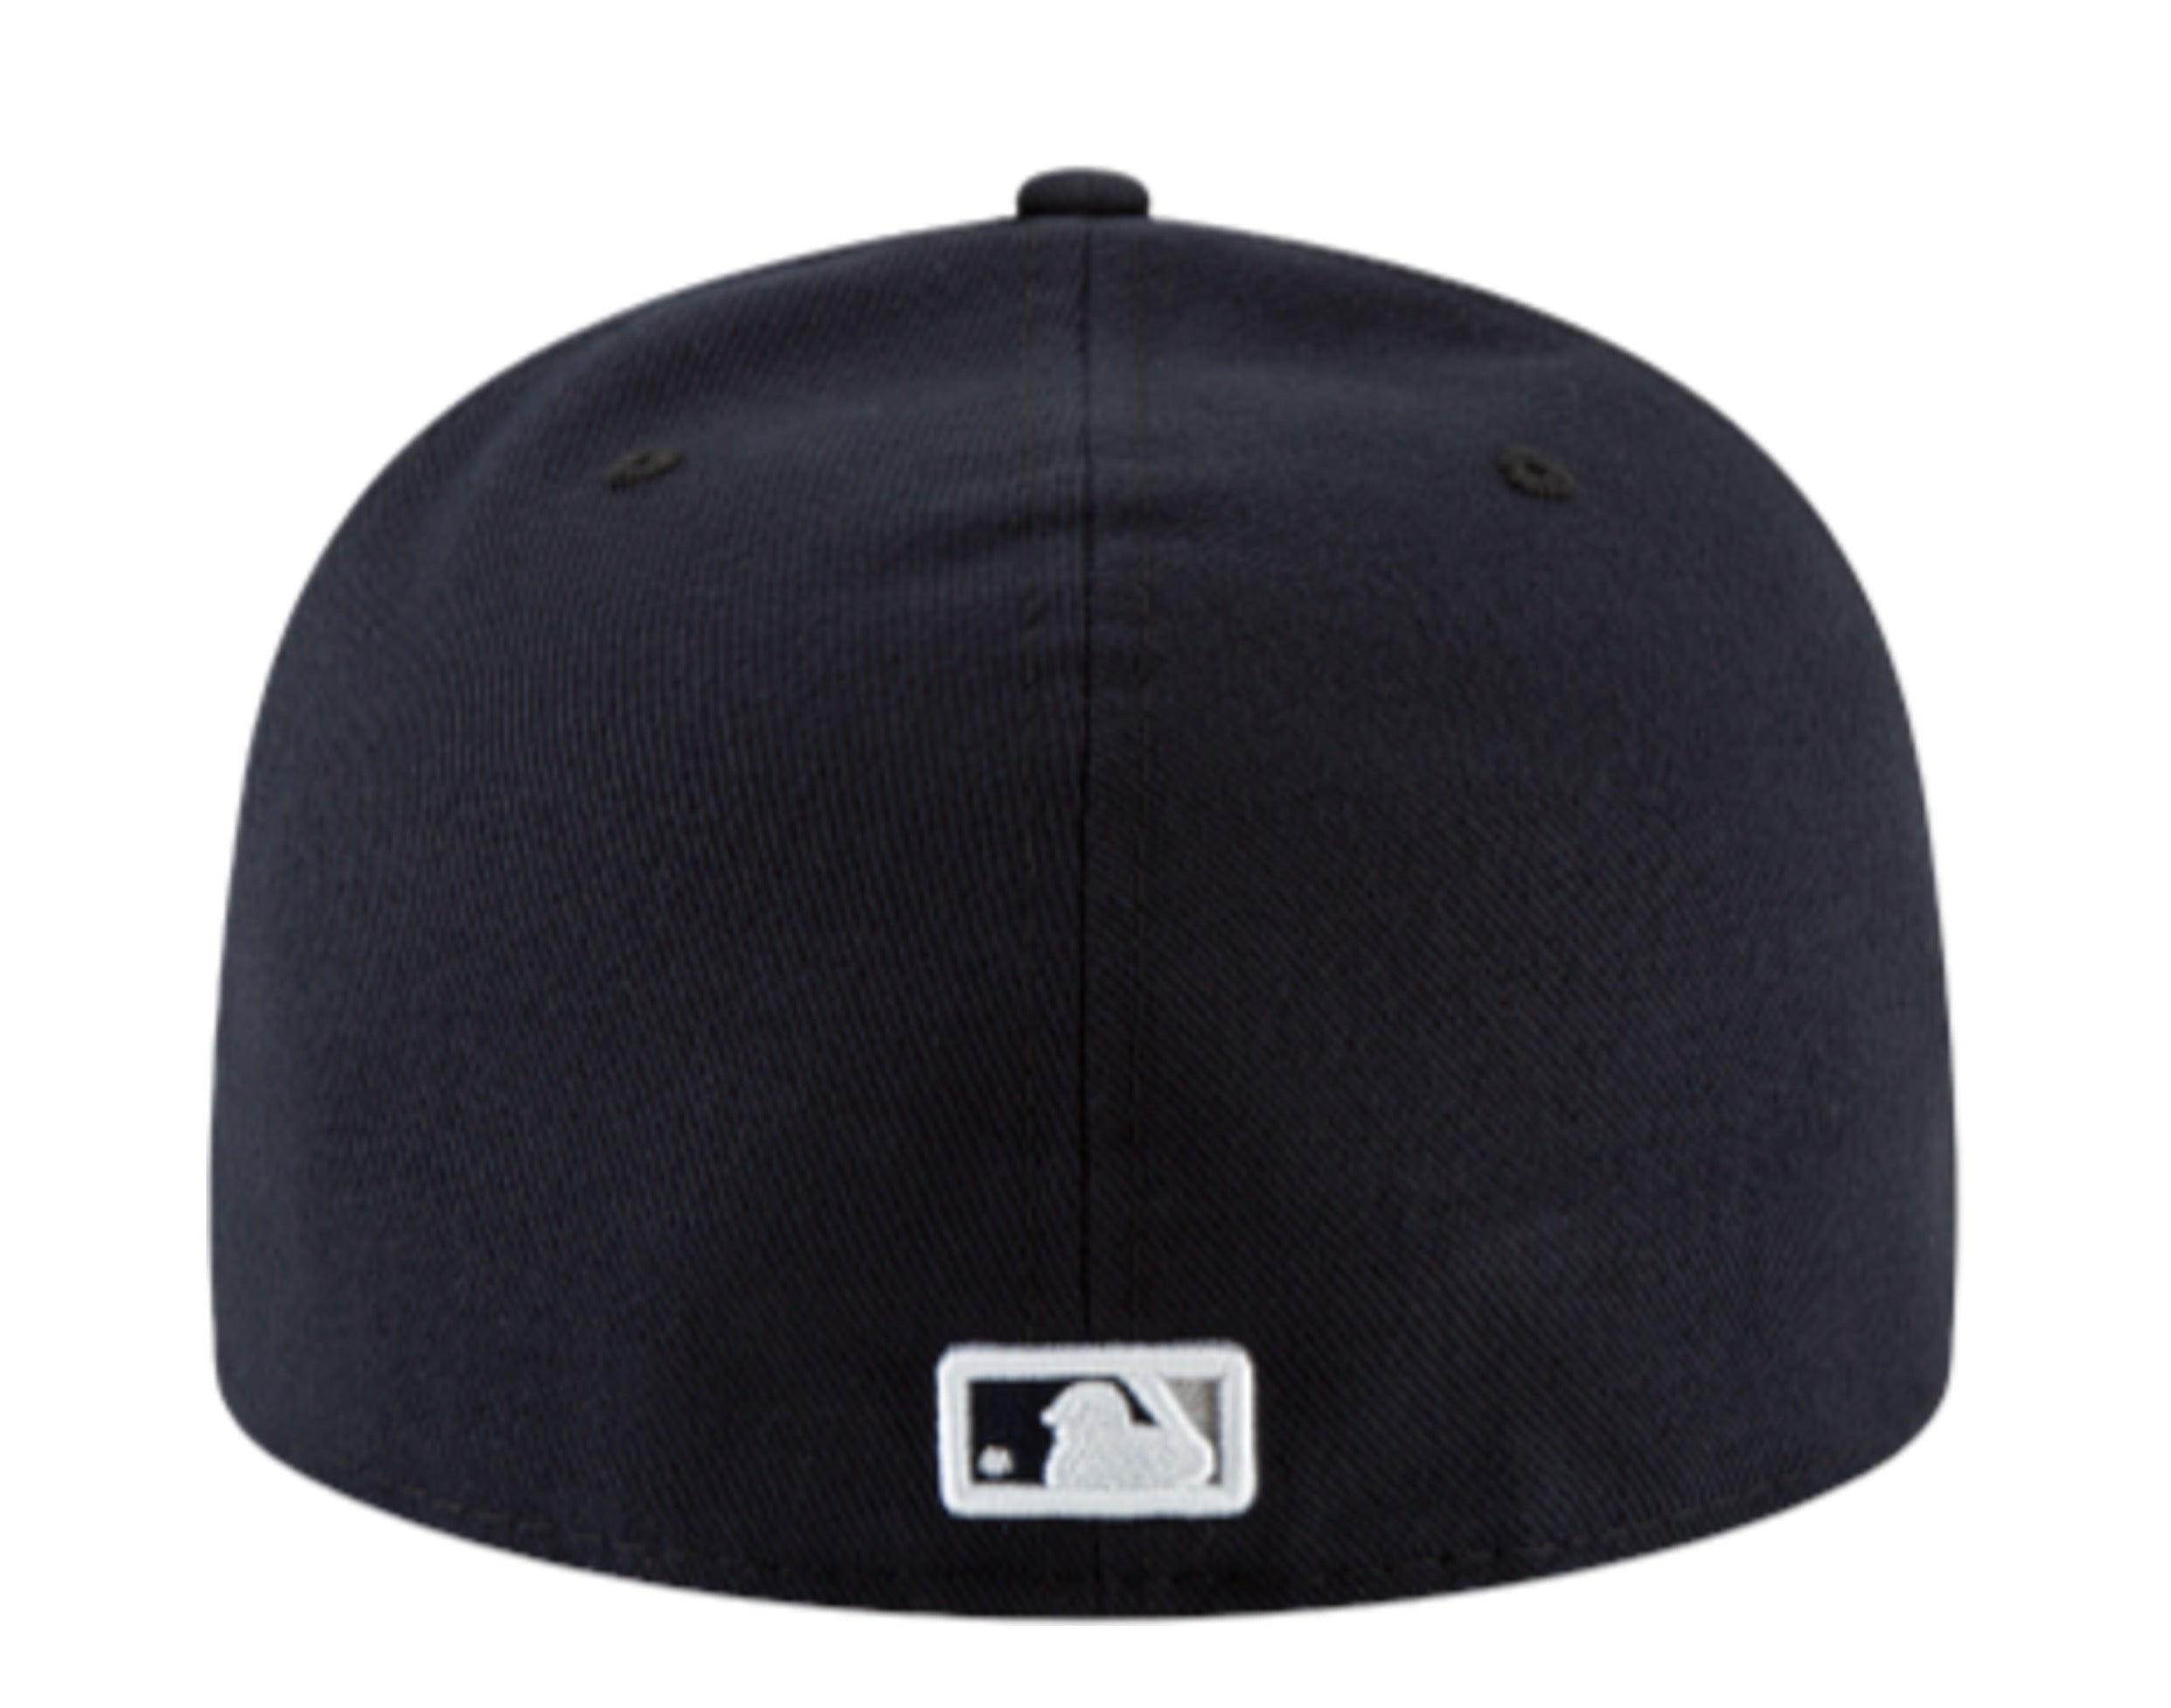 New York Yankees All Star Gear, Yankees All-Star Jerseys, Hats, Shirts